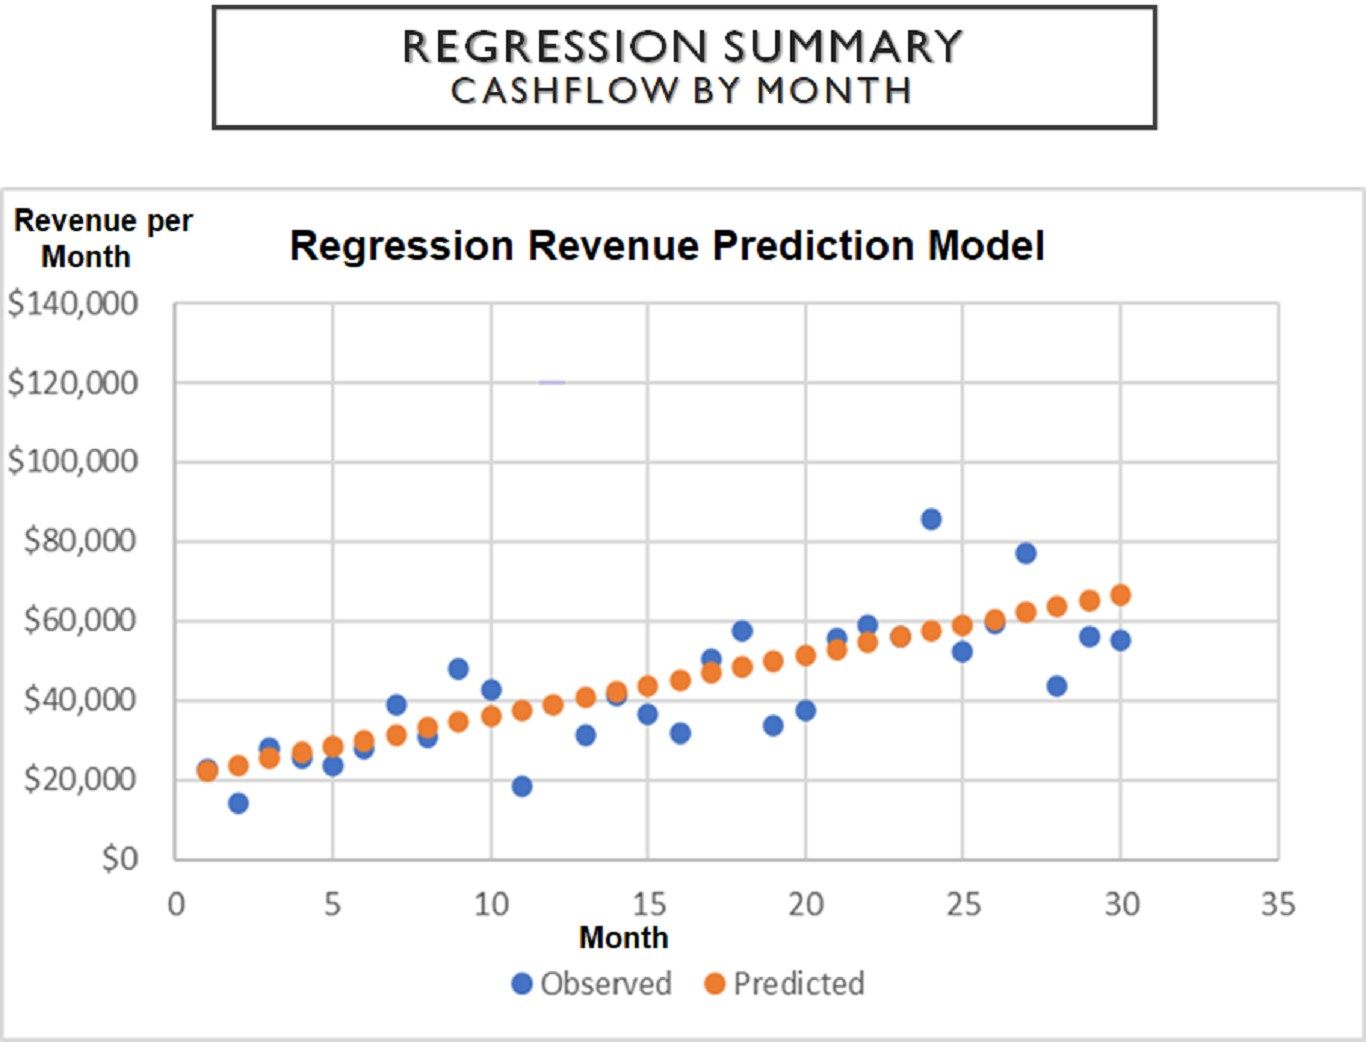 Statistical Forecast of Renenue